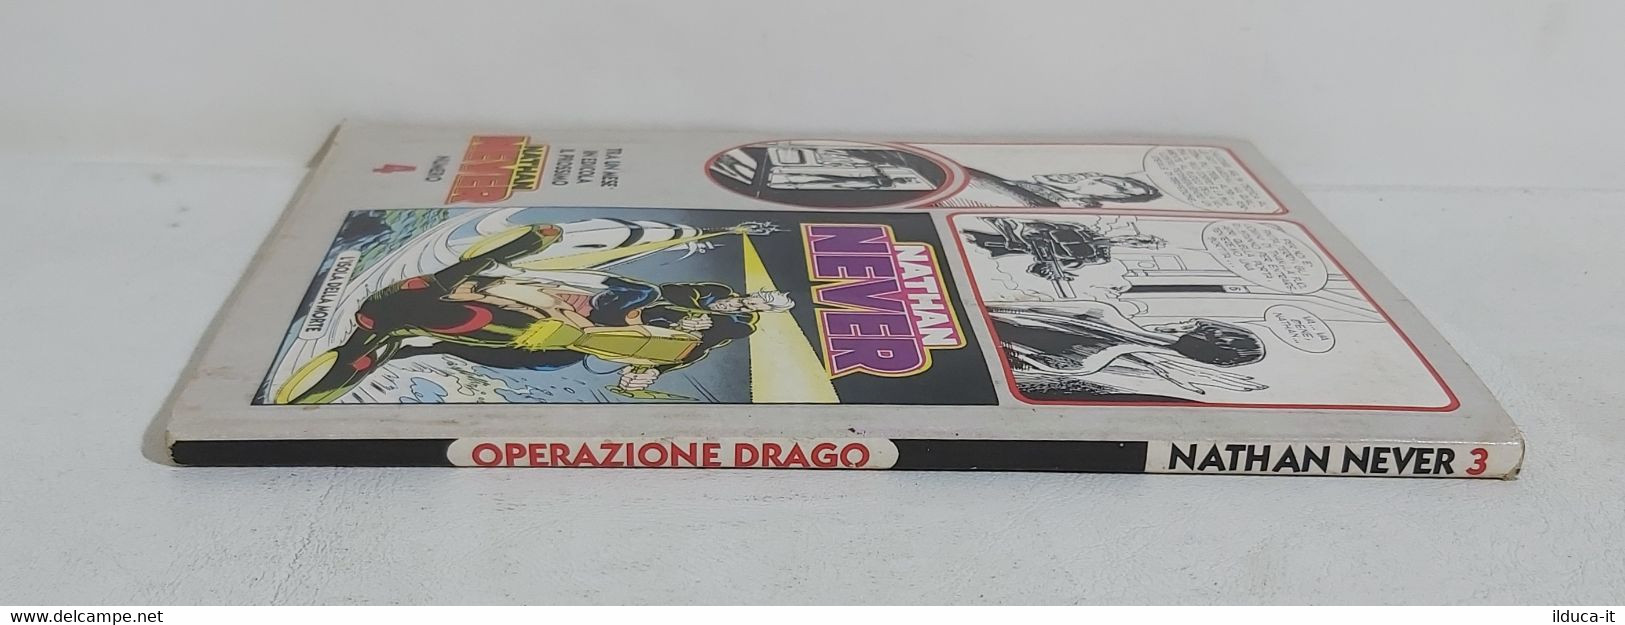 I104886 NATHAN NEVER N. 3 - Operazione Drago - Bonelli 1991 - Bonelli